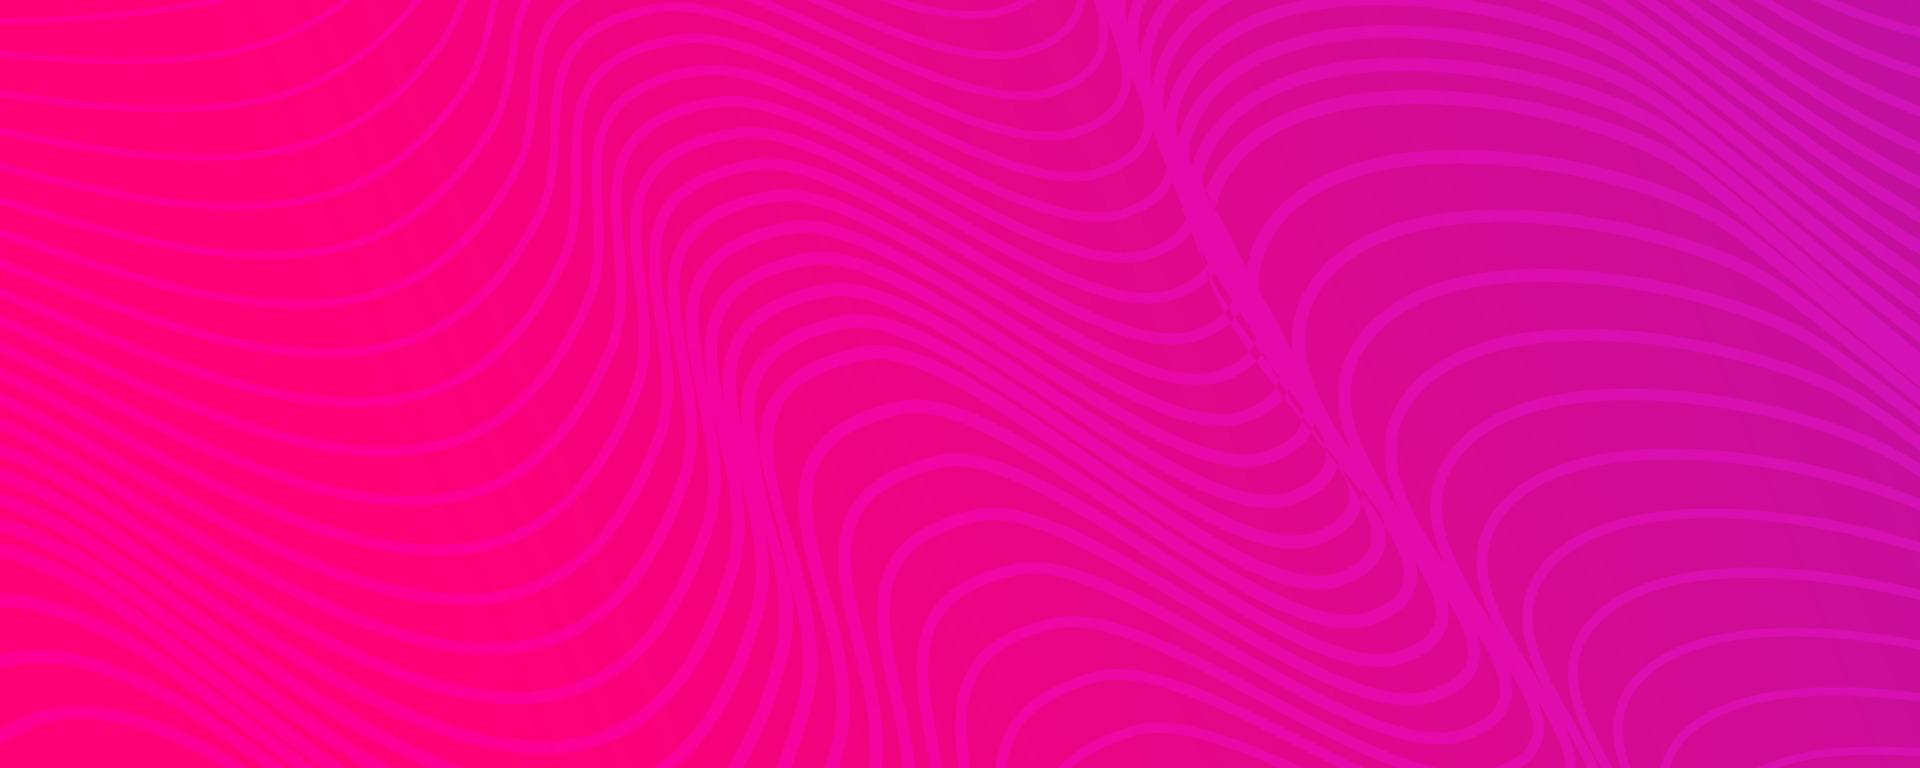 fondo degradado colorido moderno con líneas de onda. fondo de presentación abstracto geométrico rosa. ilustración vectorial vector